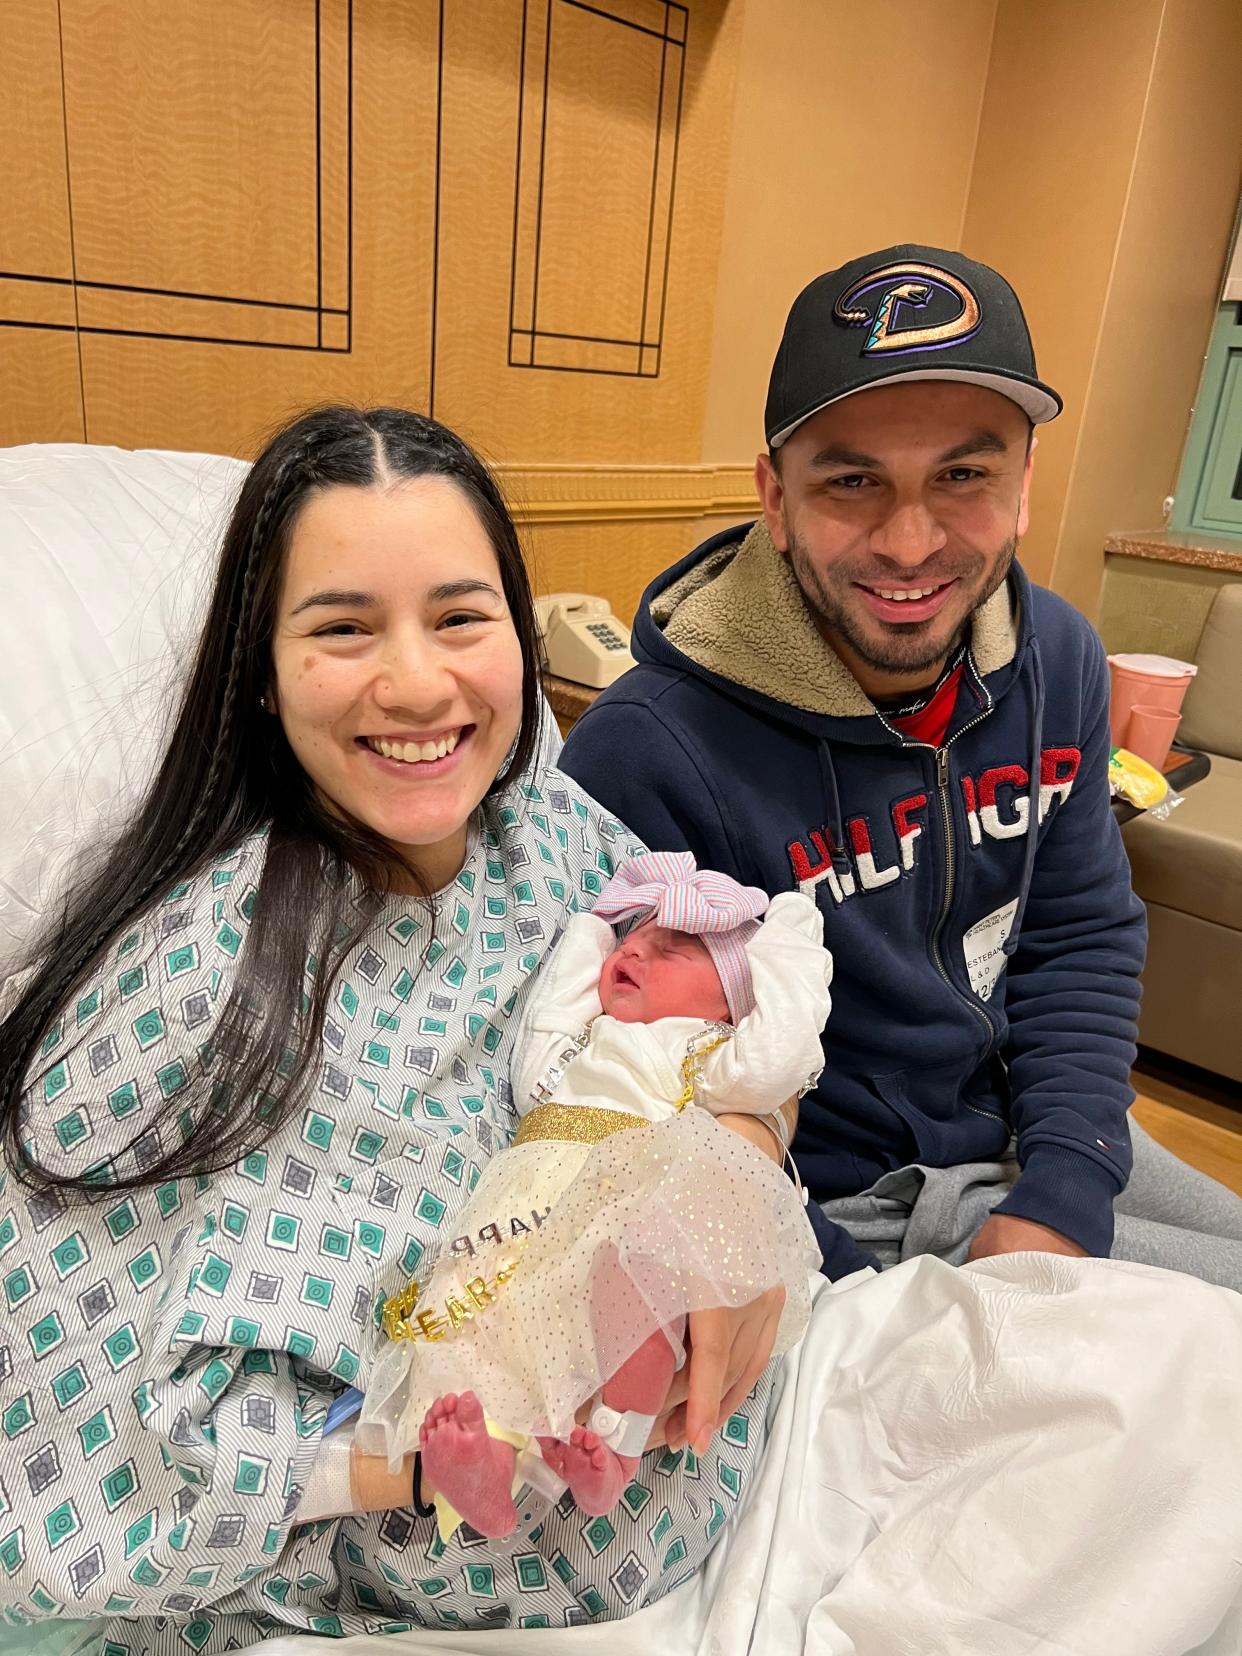 Parents Jessica Johanna Cardona-Giraldo and Esteban Josue Aguirre Monterrosa of Dunellen welcomed their New Year's Baby - daughter Belen Aguirre Cardona - at 12:01 a.m. at Saint Peter's University Hospital in New Brunswick.